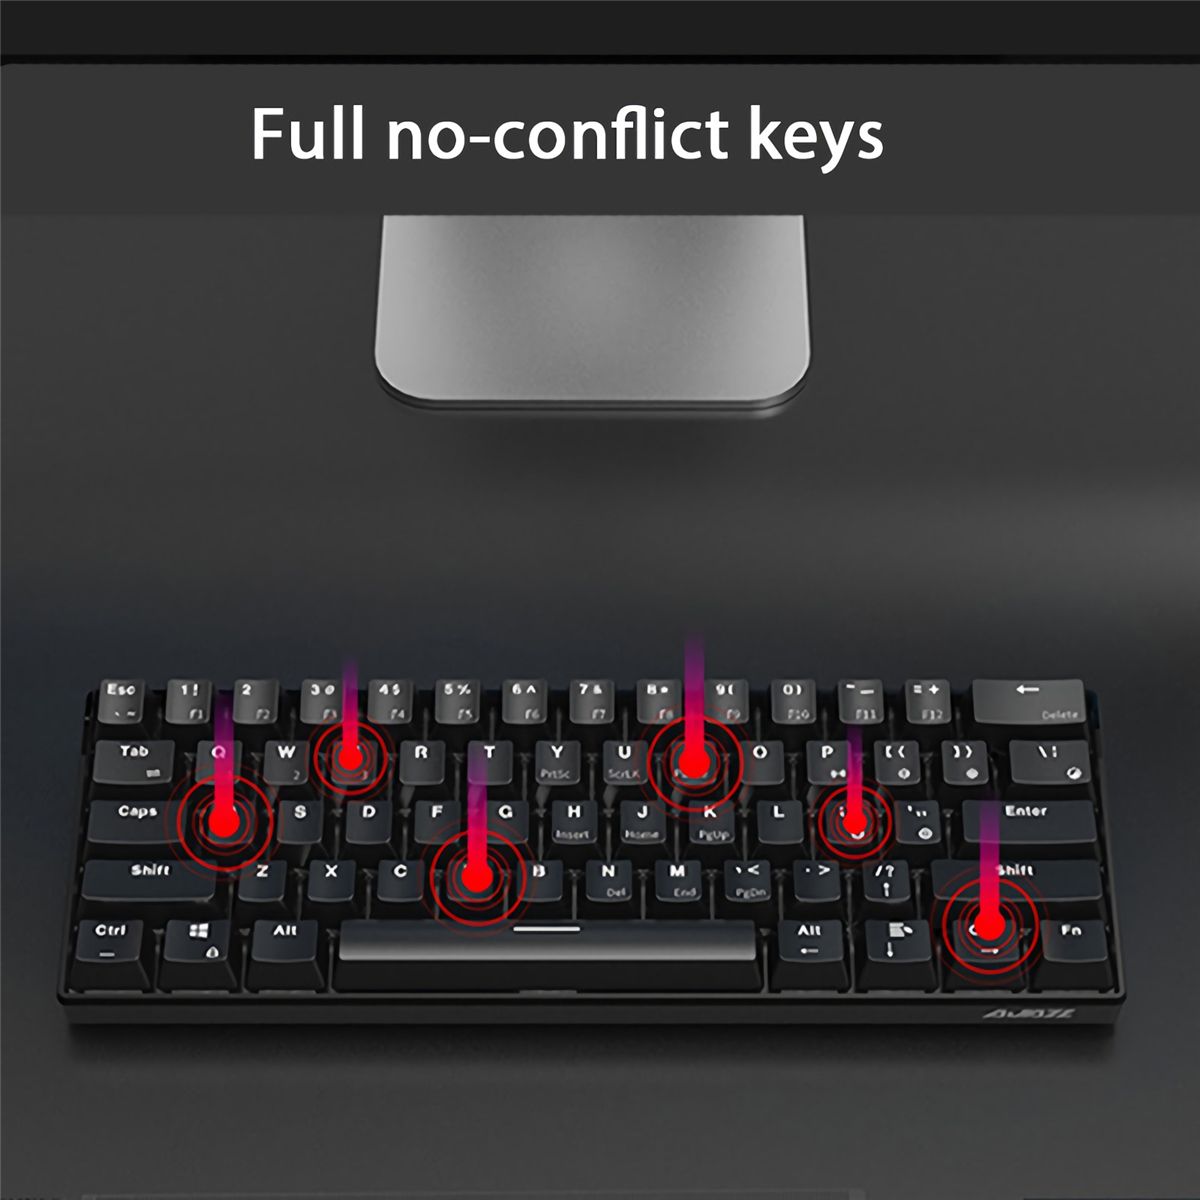 61-Keys-Mechanical-Gaming-Keyboard-WiredWireless-Dual-Mode-bluetooth-Type-C-Gaming-Keyboard-with-RGB-1740713